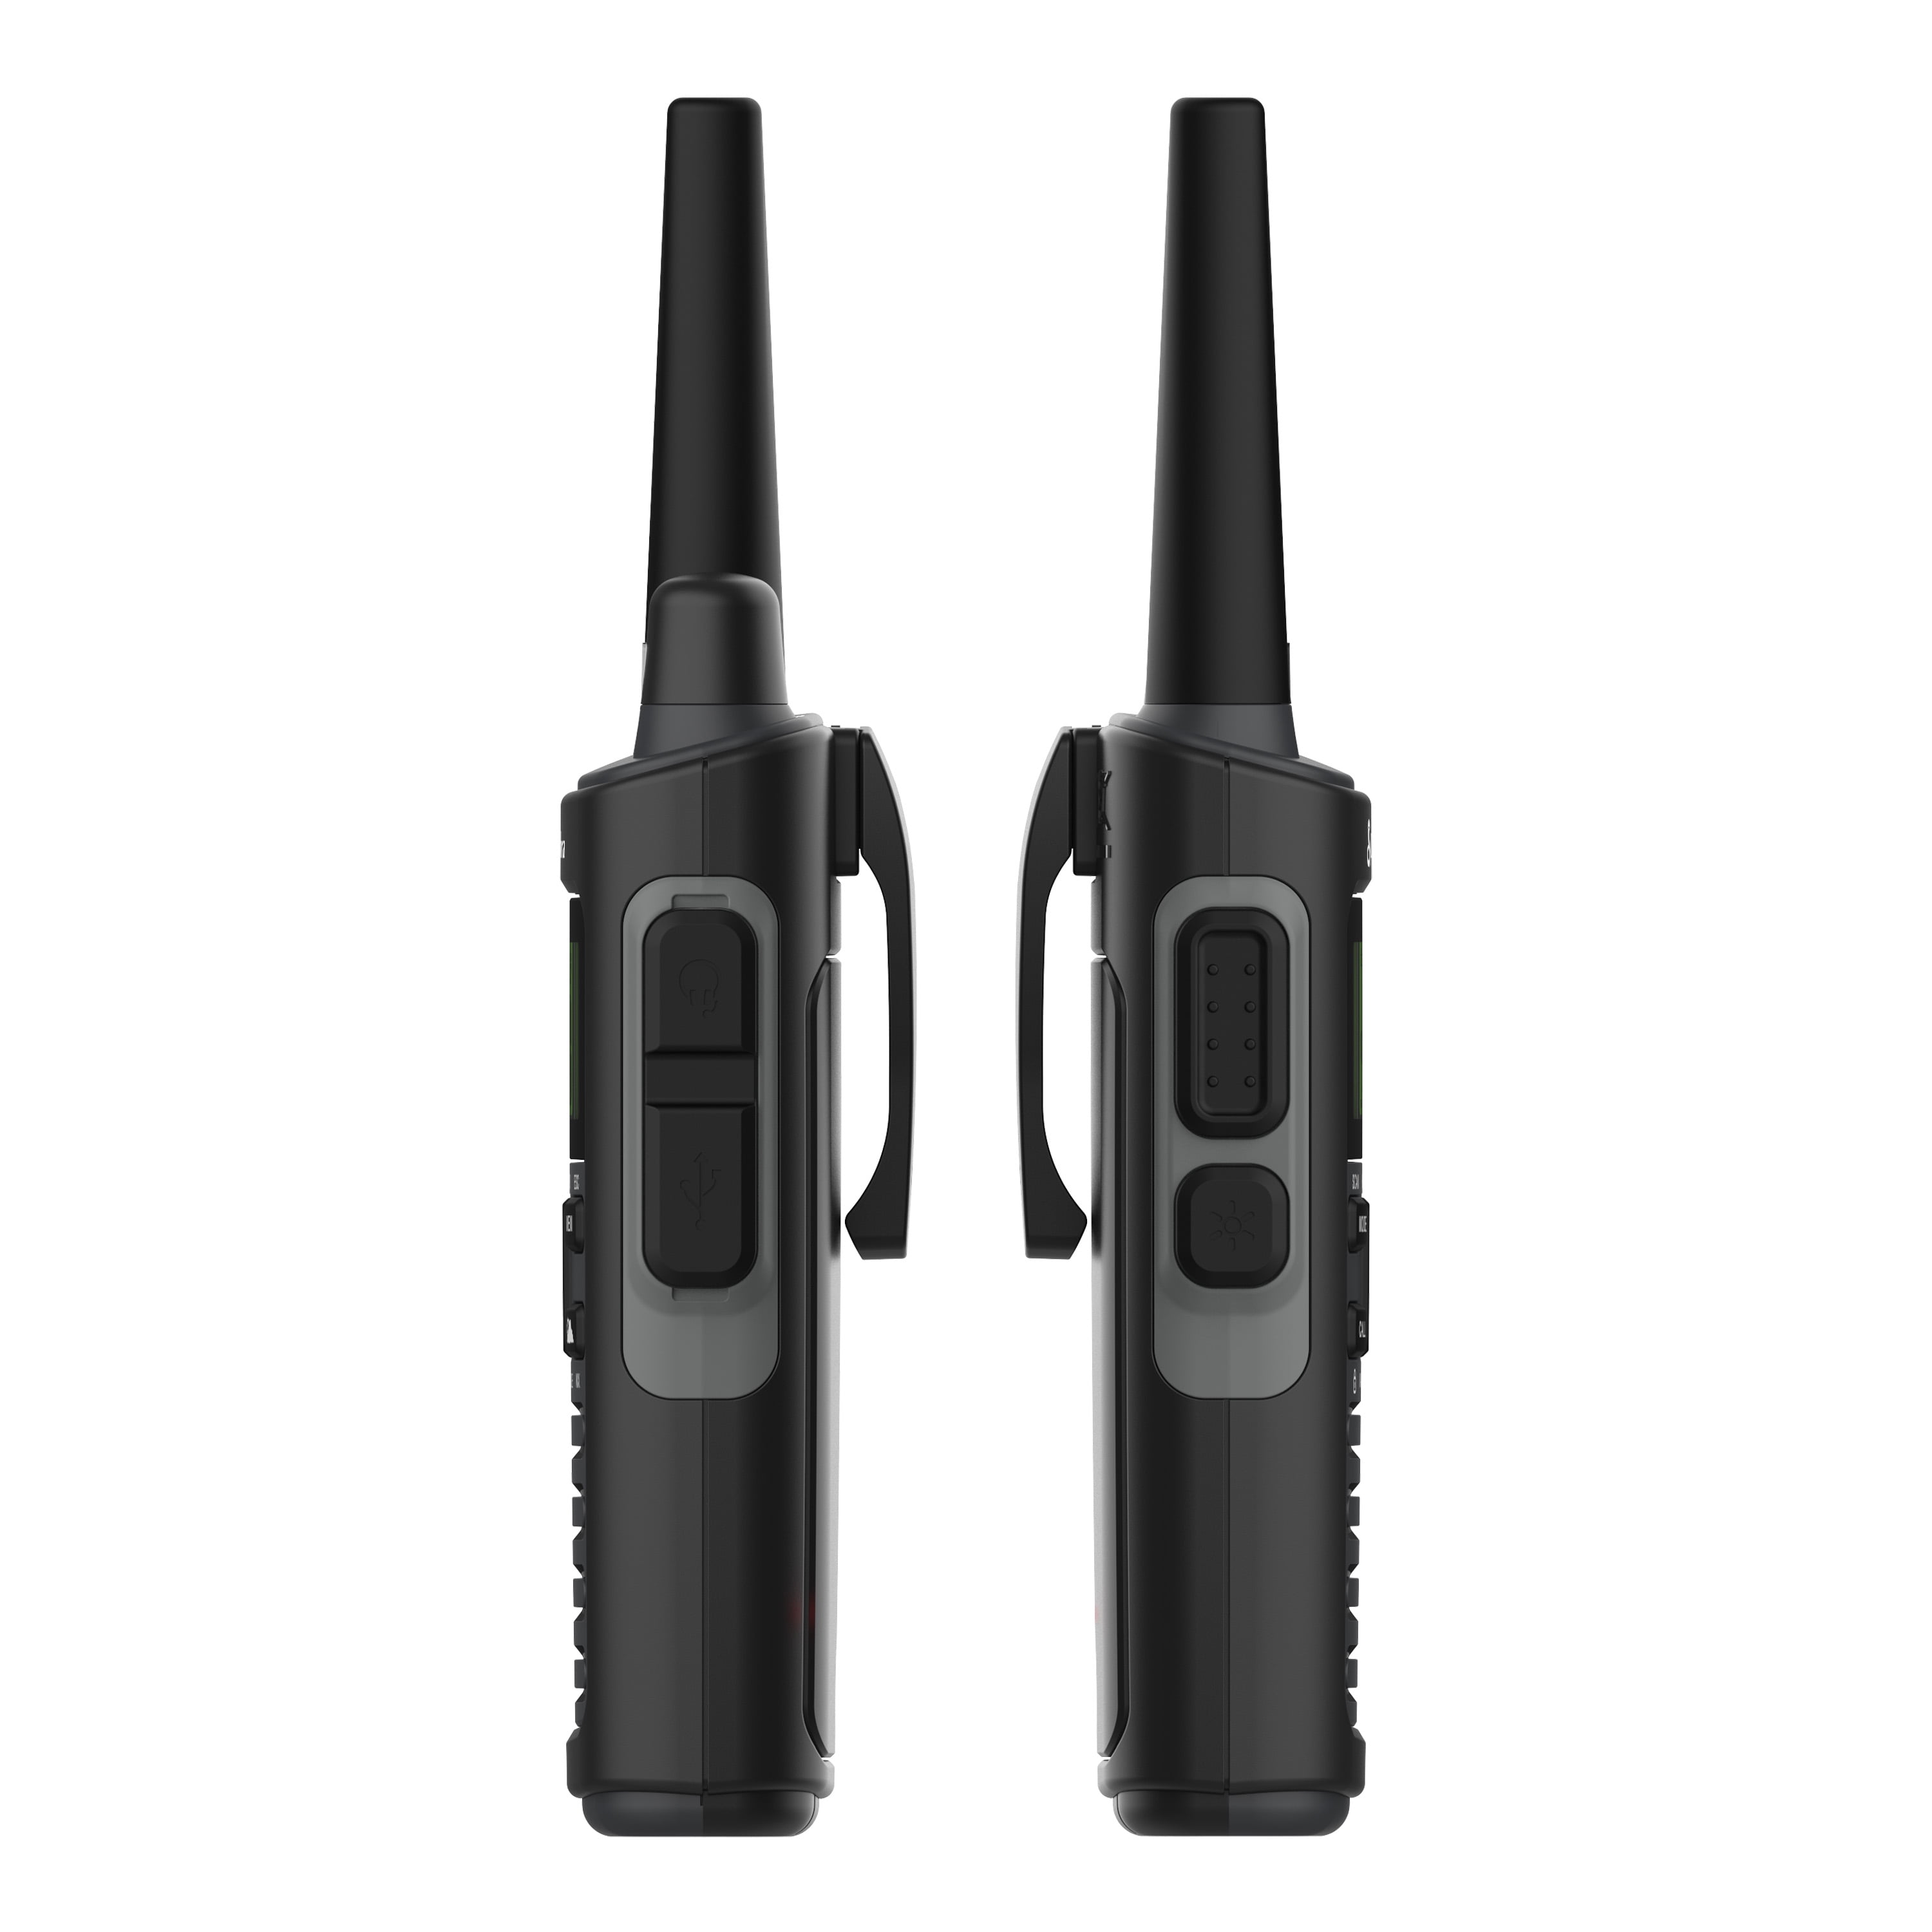 Cobra RX685 Walkie Talkies Two-Way Radios (Pair), 40-mile Range and 60  Channels with 121 Privacy Codes - IP54 Waterproof & NOAA Weather Alerts 